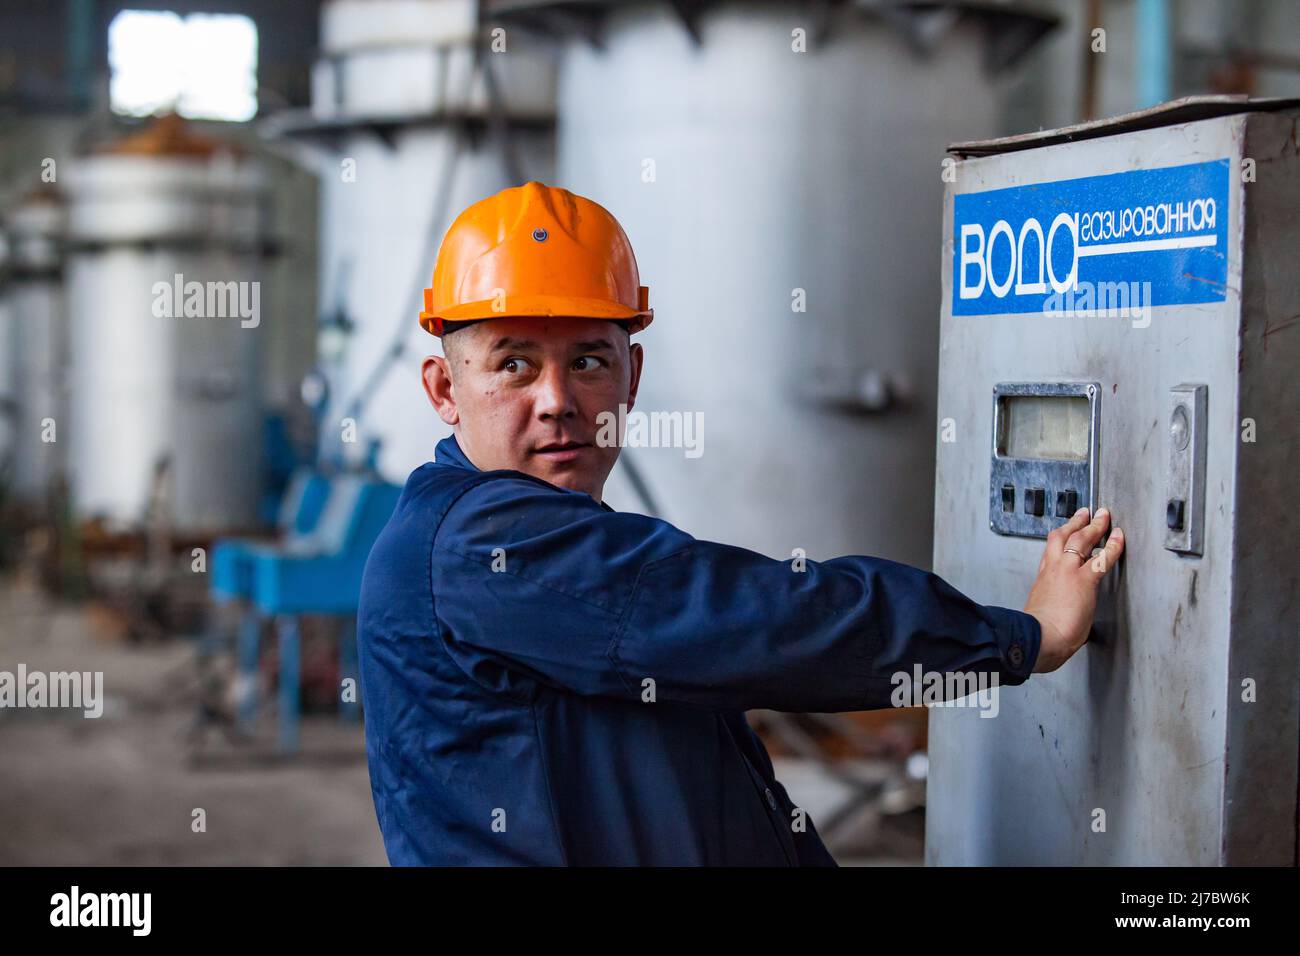 Ust'-Kamenogorsk, Kazakhstan - May 31, 2012: Portrait of Asian worker man in orange hardhat in metallurgy factory workshop. Takes water from carbonate Stock Photo